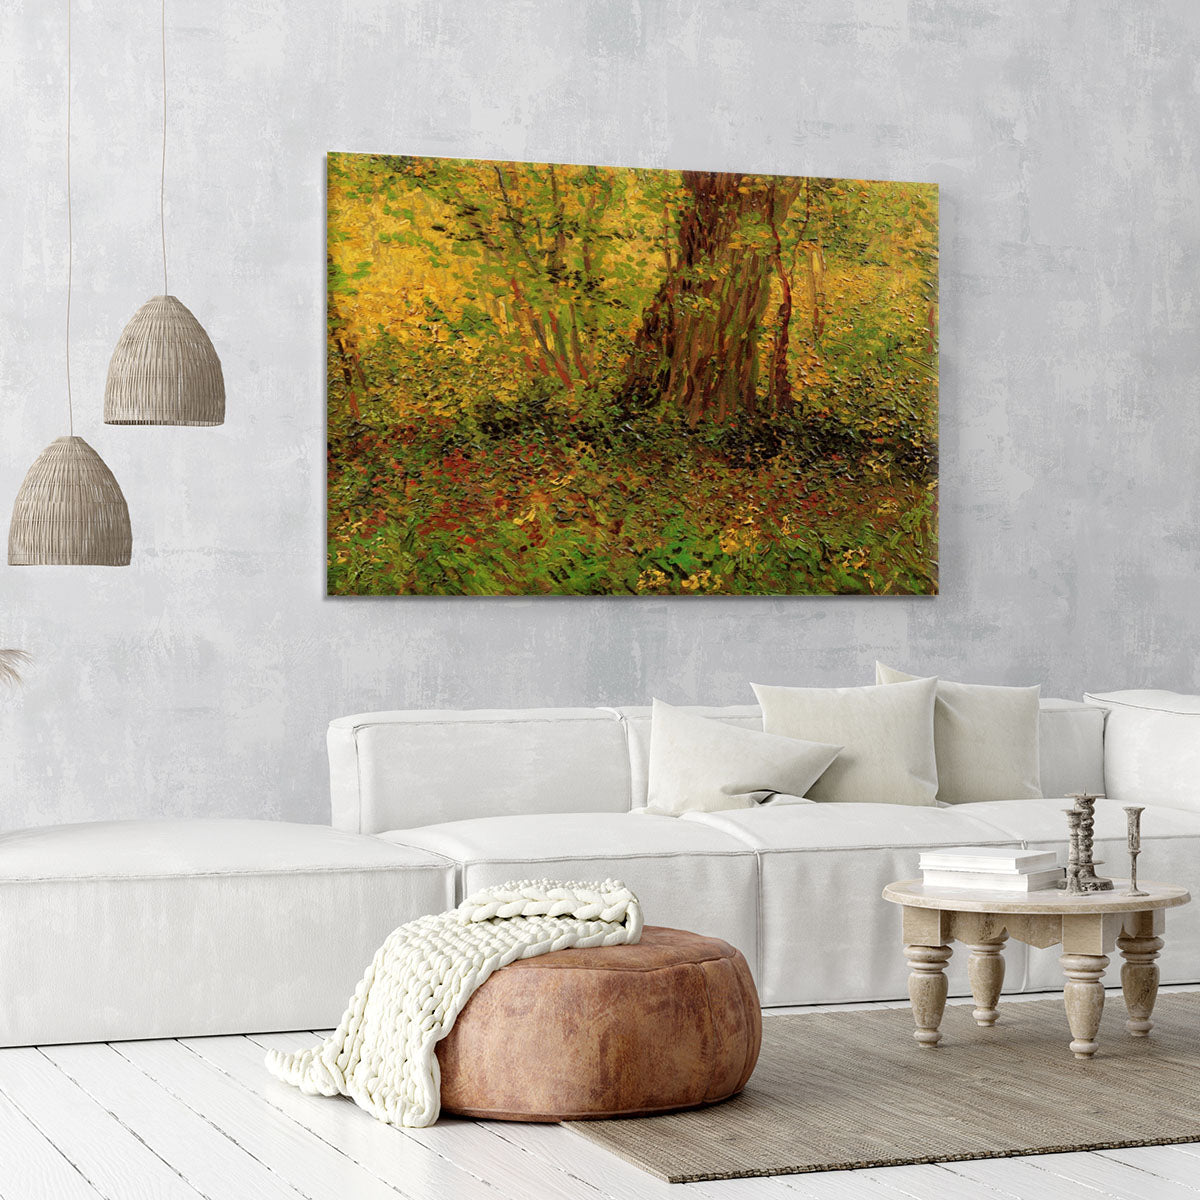 Undergrowth 2 by Van Gogh Canvas Print or Poster - Canvas Art Rocks - 6